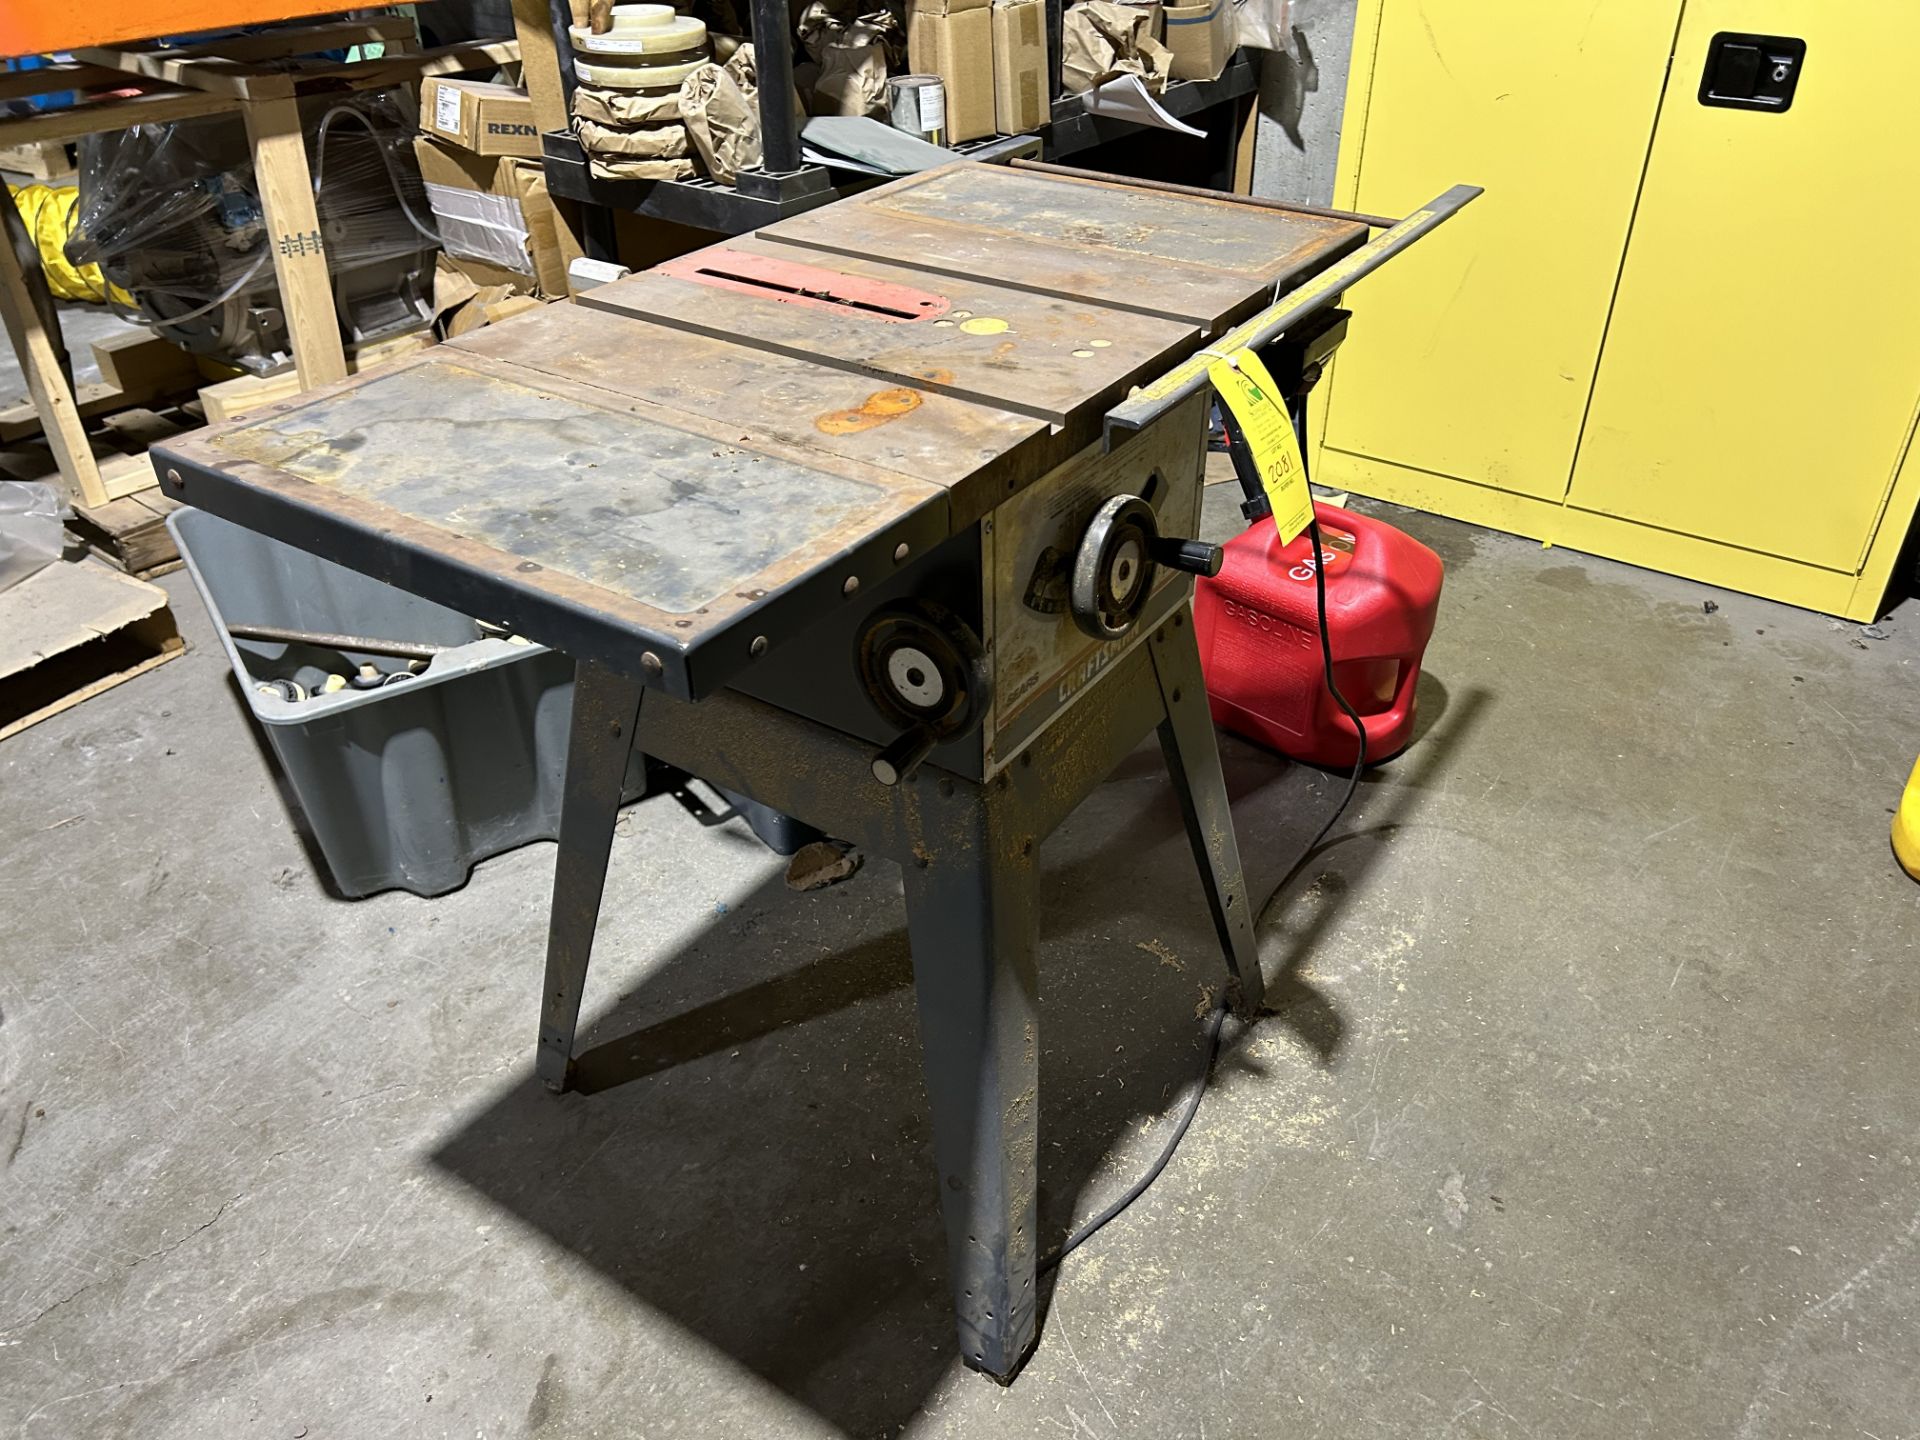 Craftsman Table Saw, Rigging & Loading Fee: $125